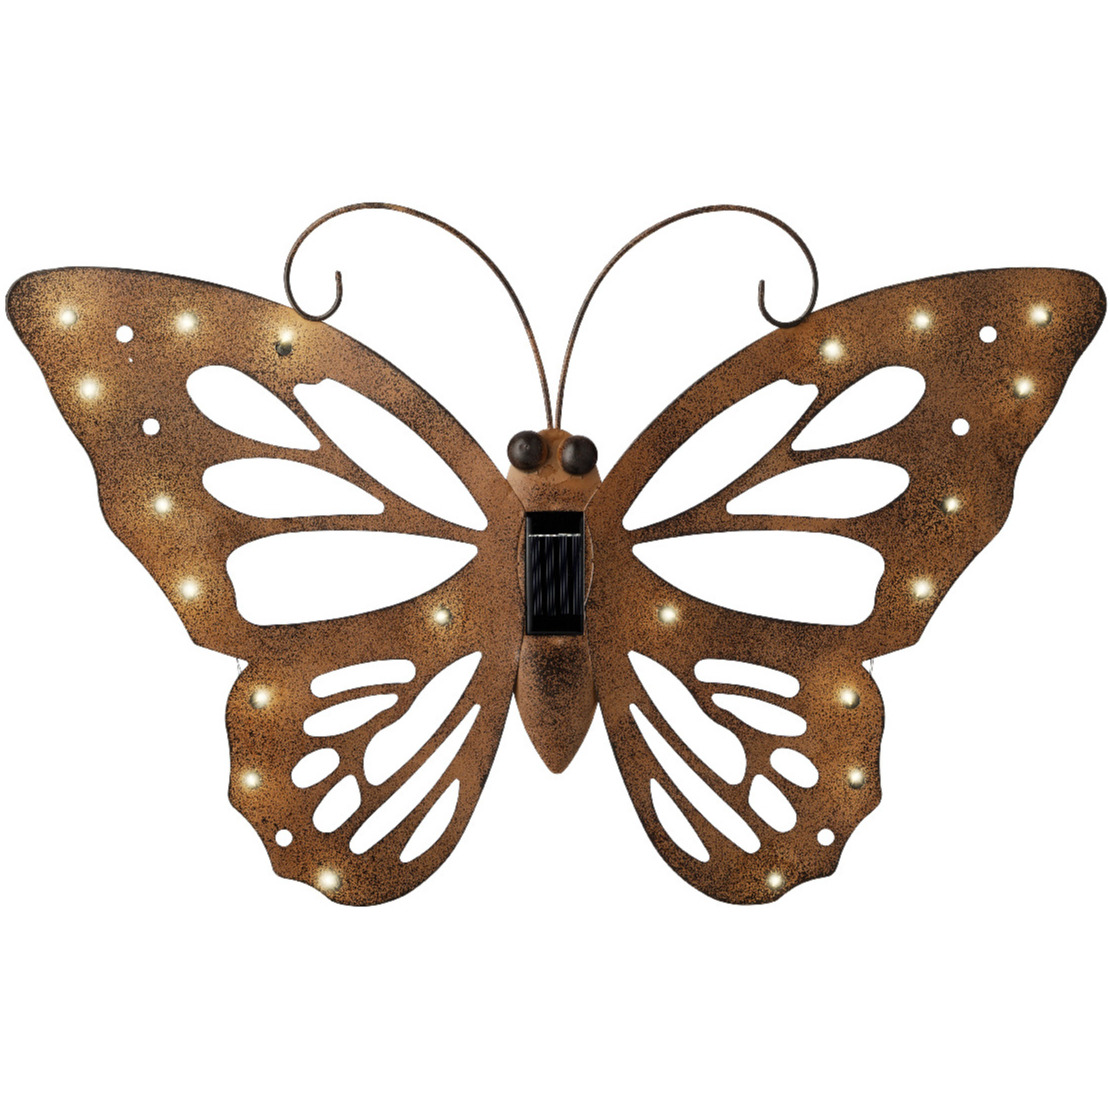 Tuindecoratie vlinder met solar verlichting 53 x 35 cm roestbruin